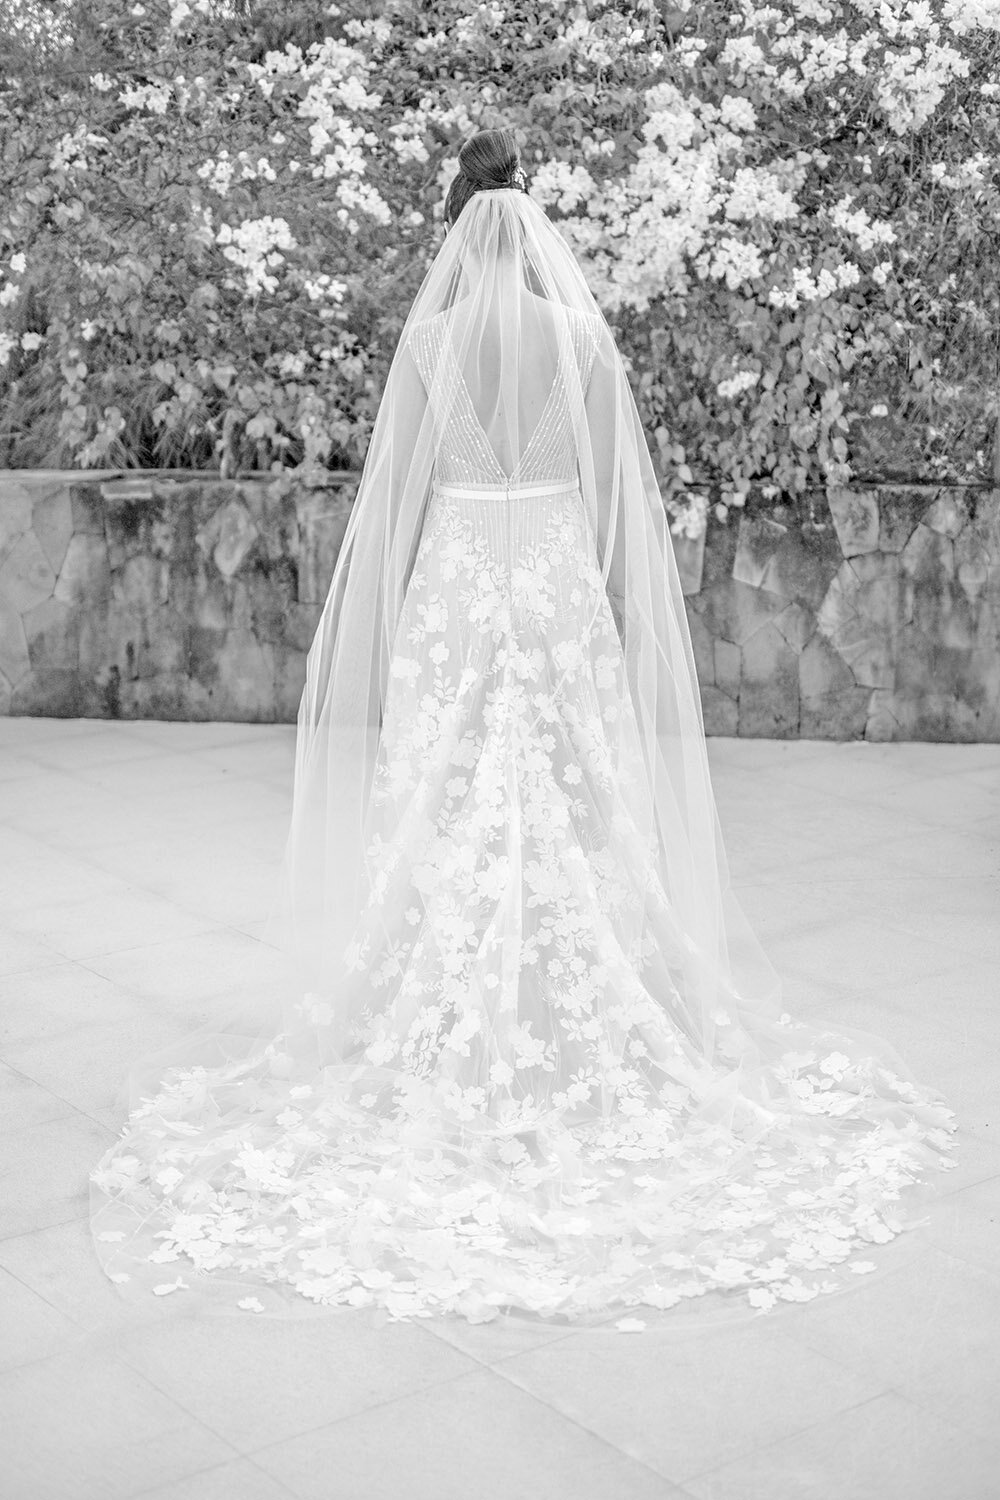 destination-wedding-bali-amankila-gown-low-v-back-flower-applique-long-train-veil